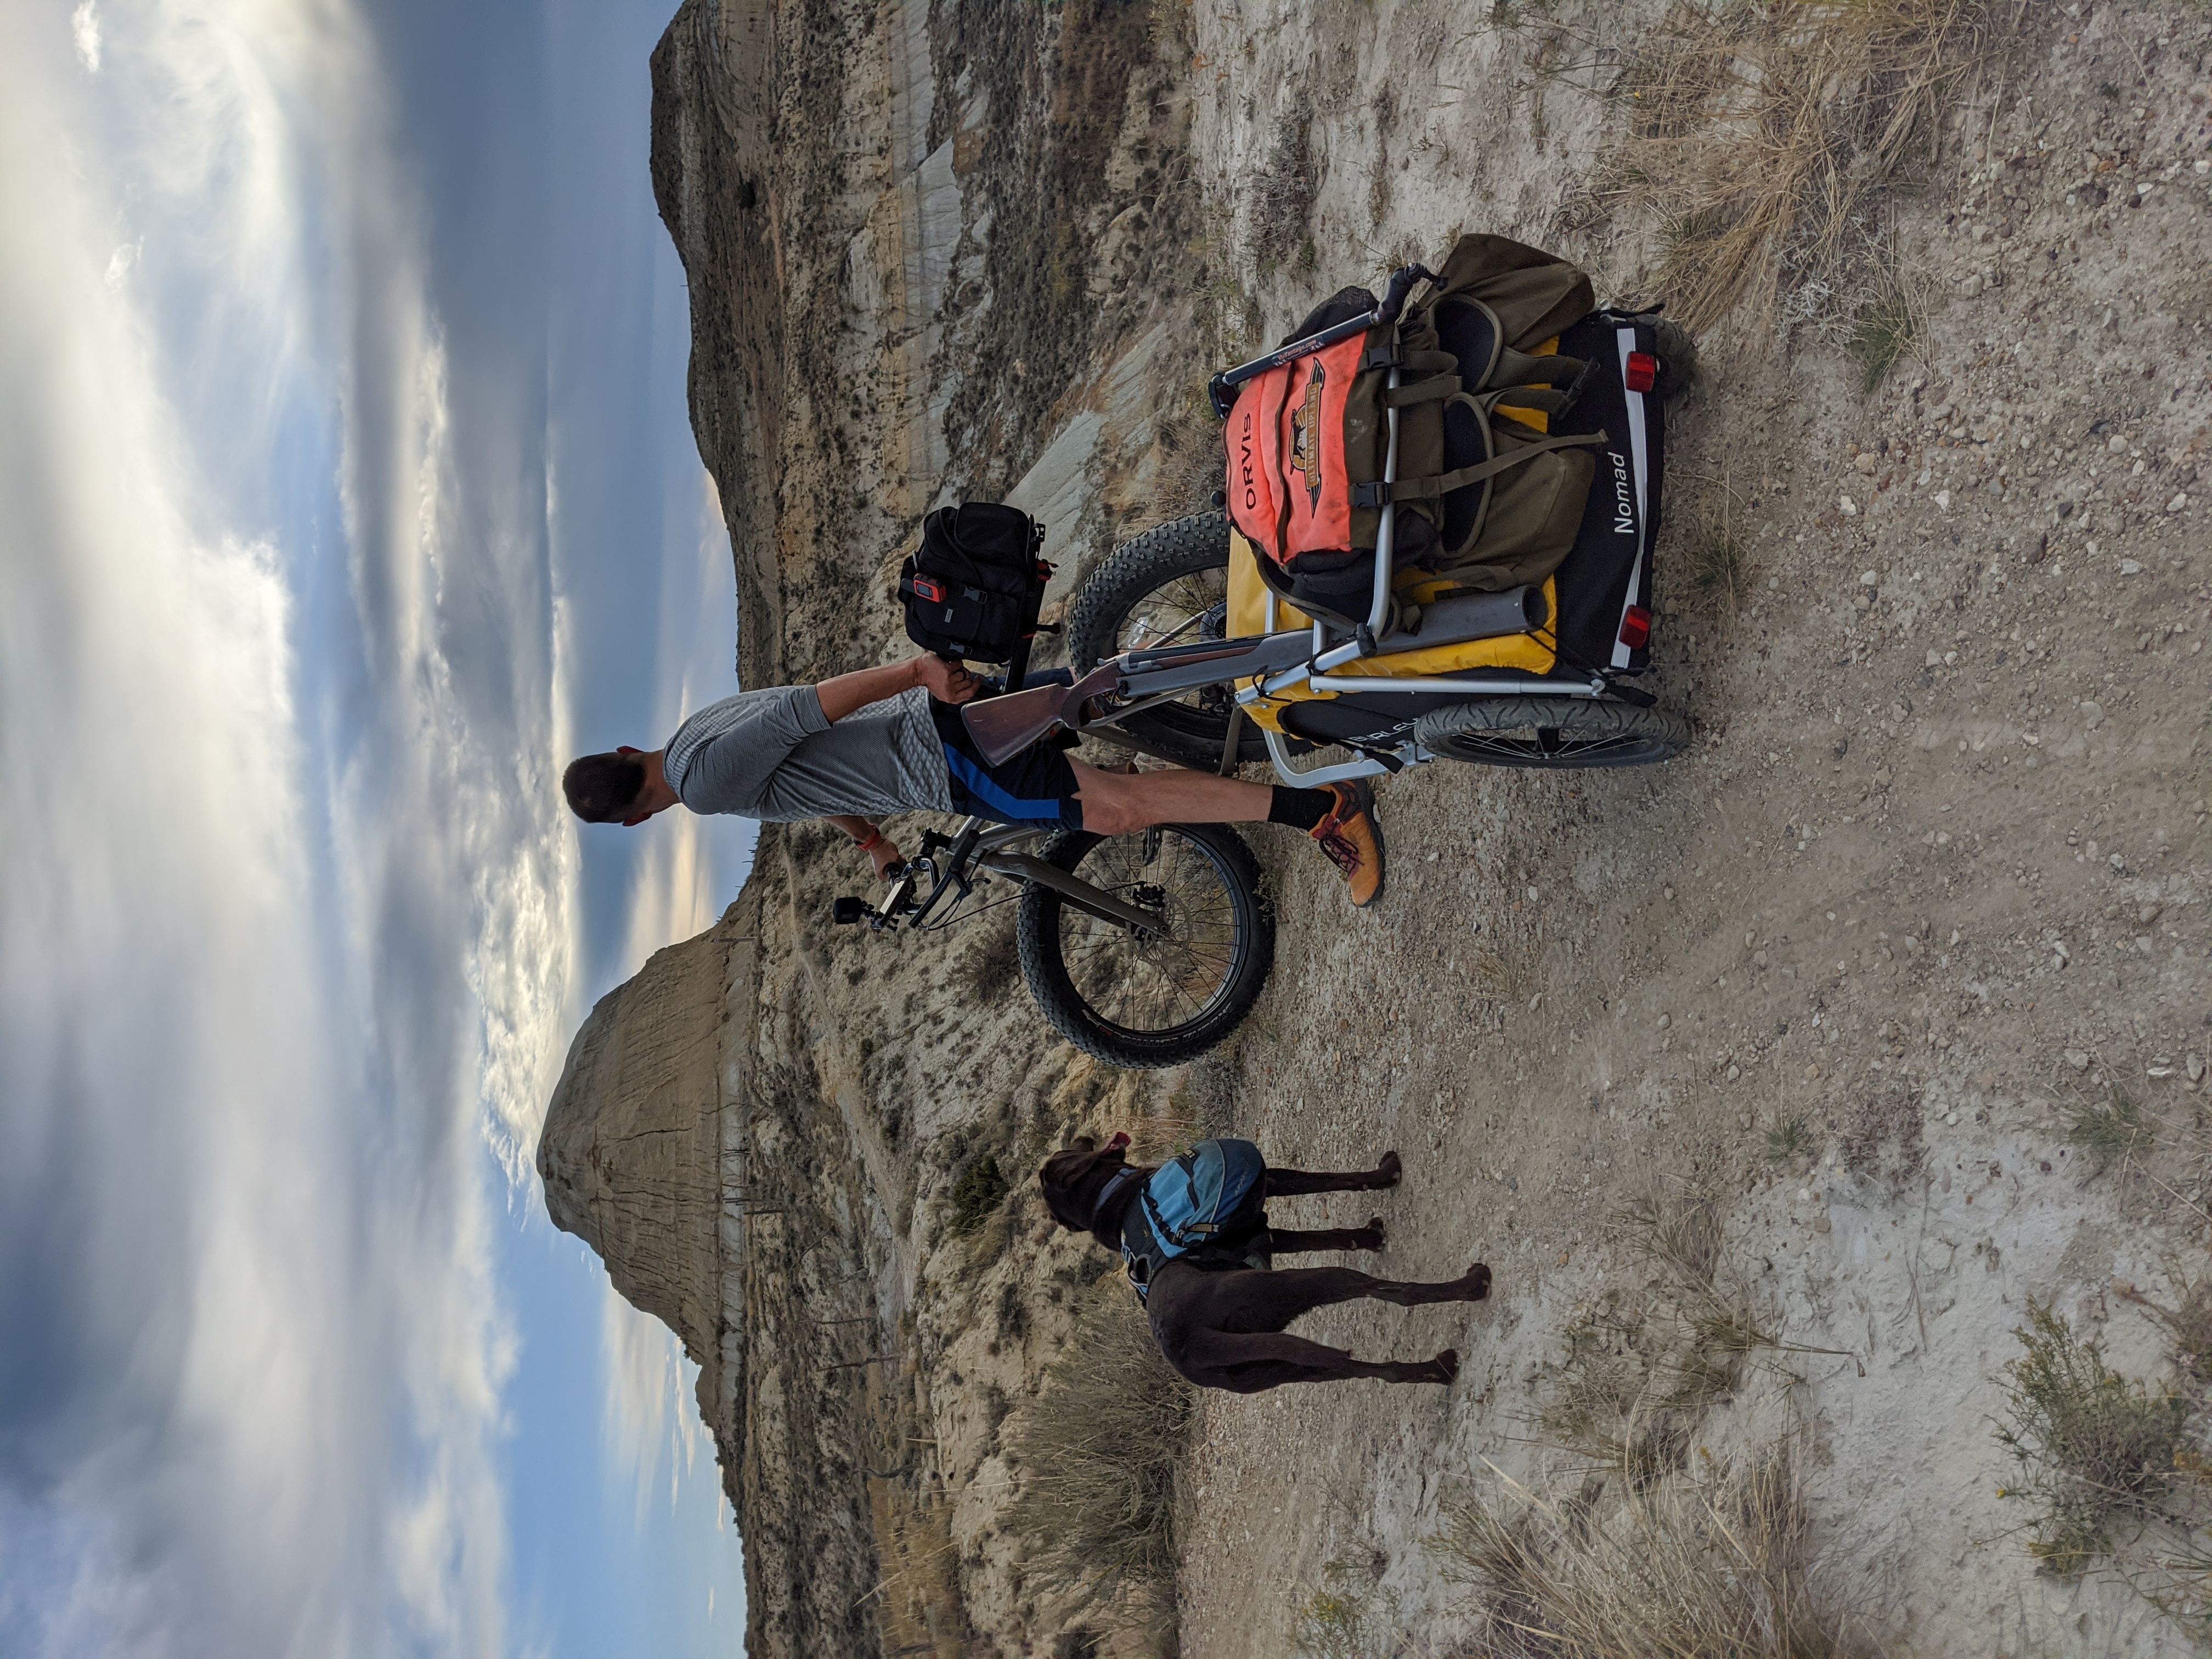 Brian and his lab Ida on their fat tire bike on the Maah Daah Hey Trail.